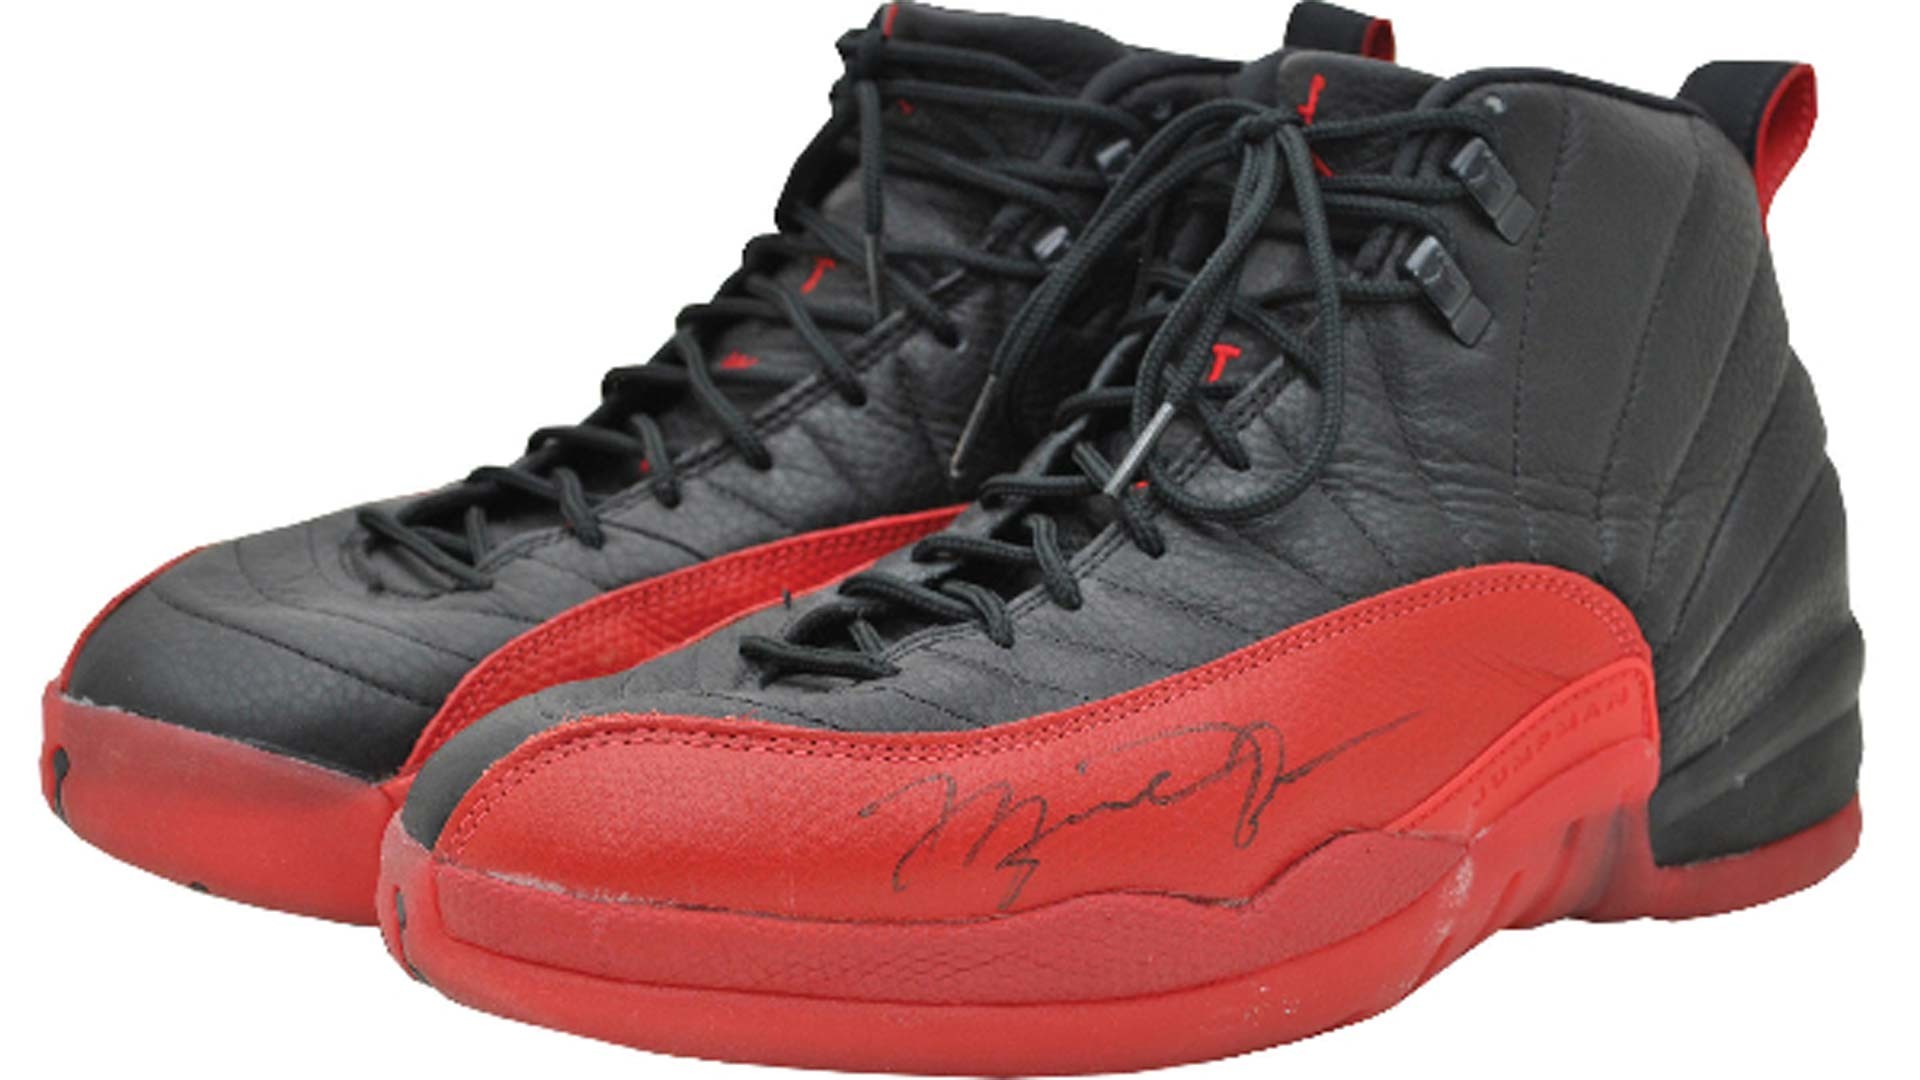 1920x1080 Michael Jordan's 'Flu Game' Jordan XIIs sell for $104,765 at auction | NBA  | Sporting News